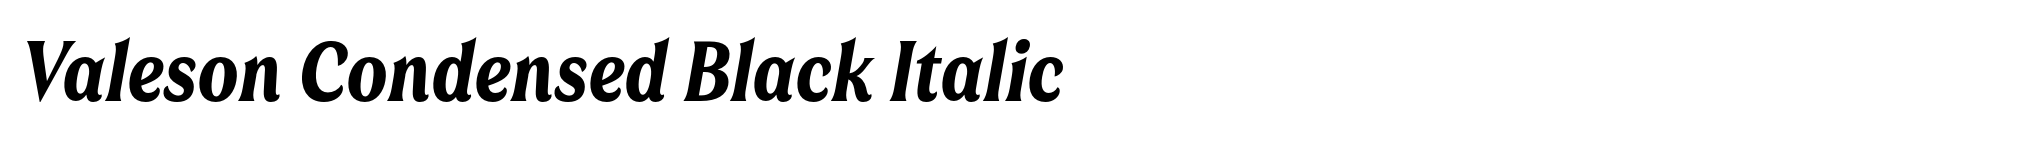 Valeson Condensed Black Italic image